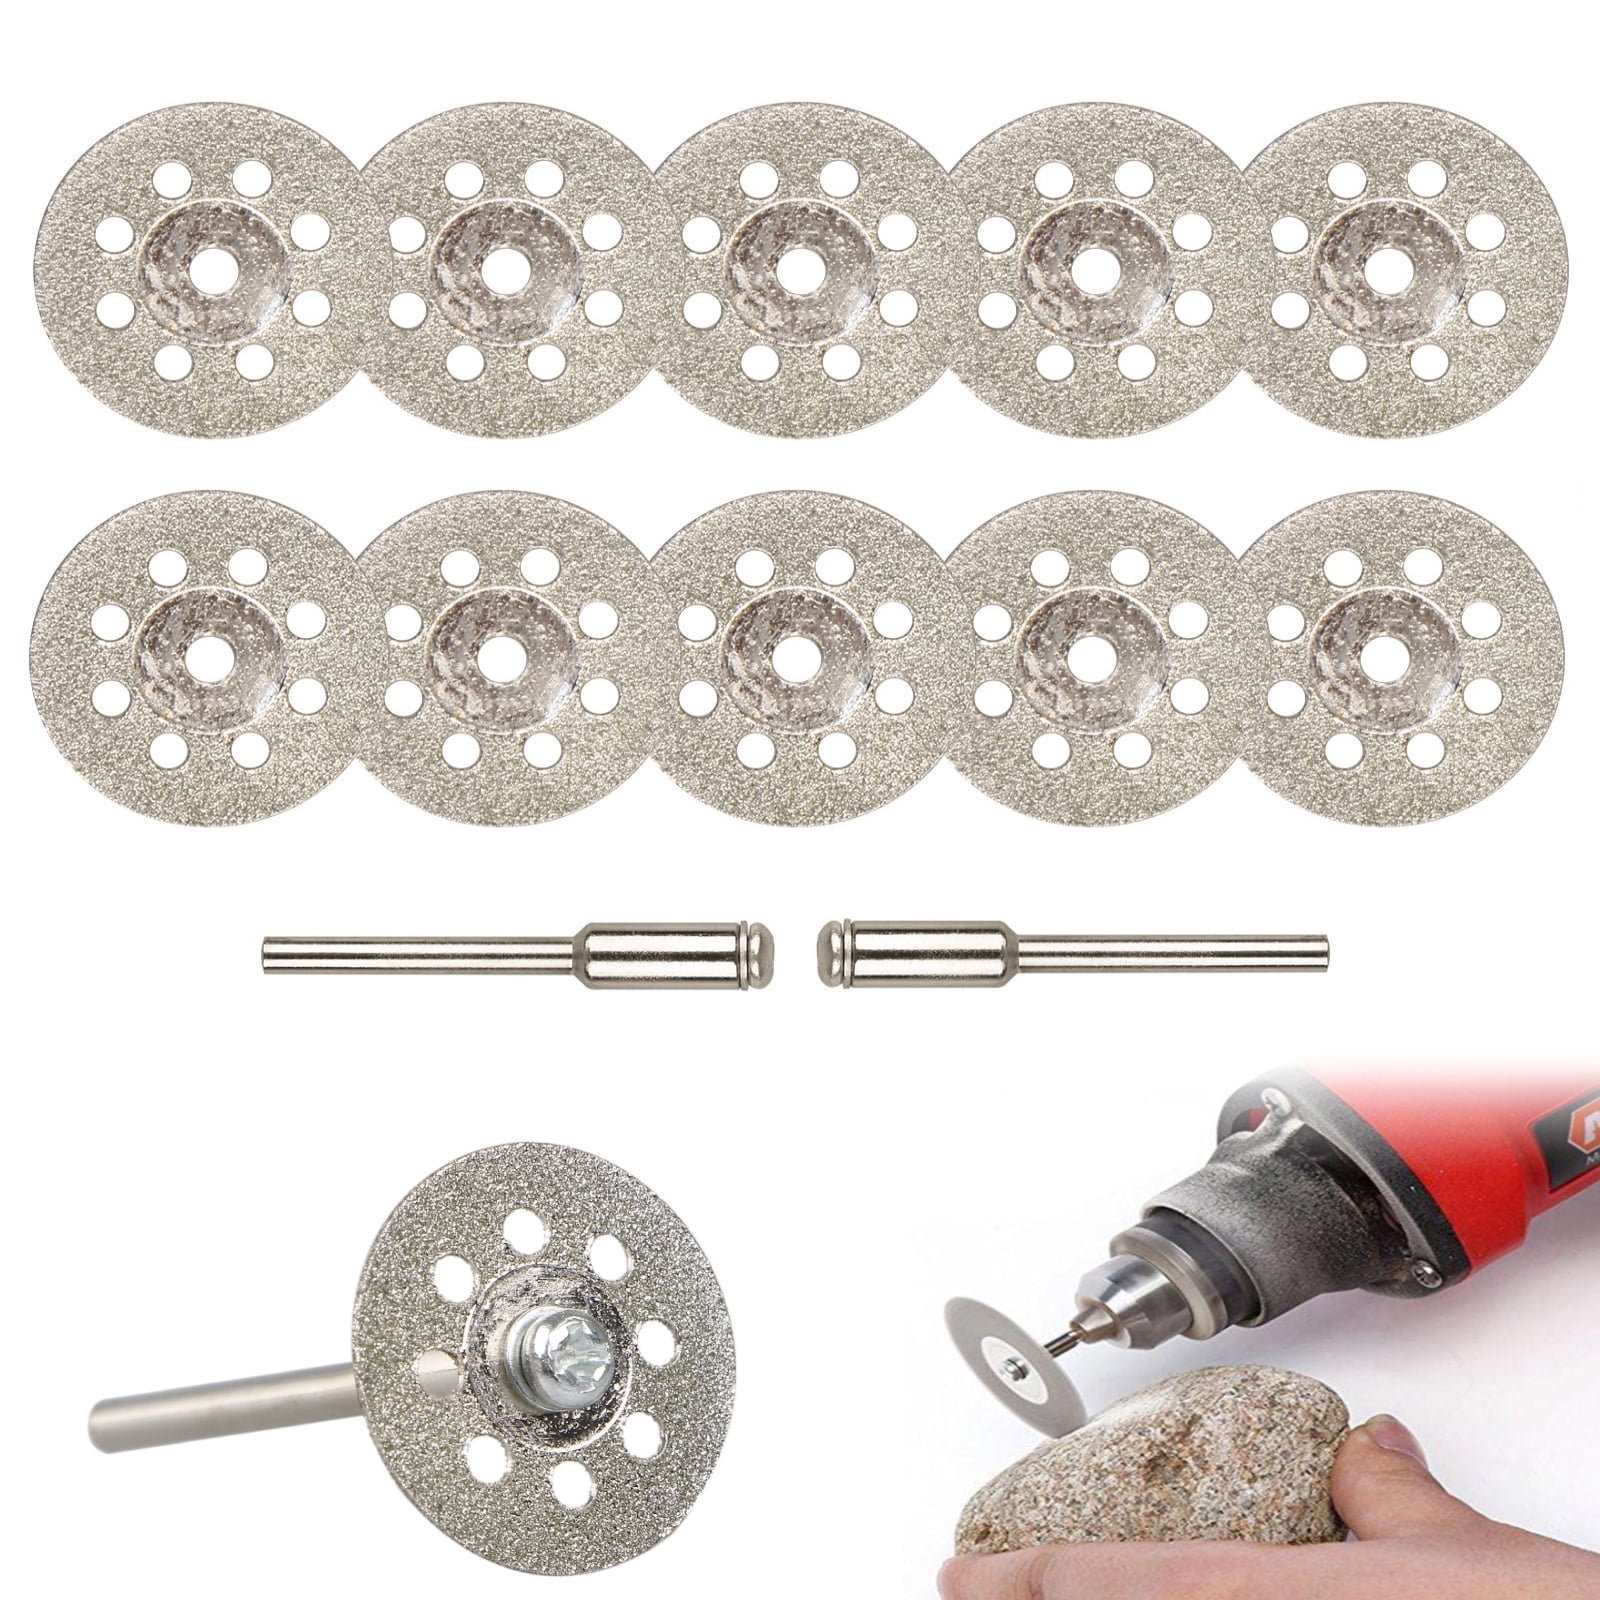 42 PCS Diamond Cutting Wheel Saw Blades Cut Off Discs Set for Dremel Rotary Tool